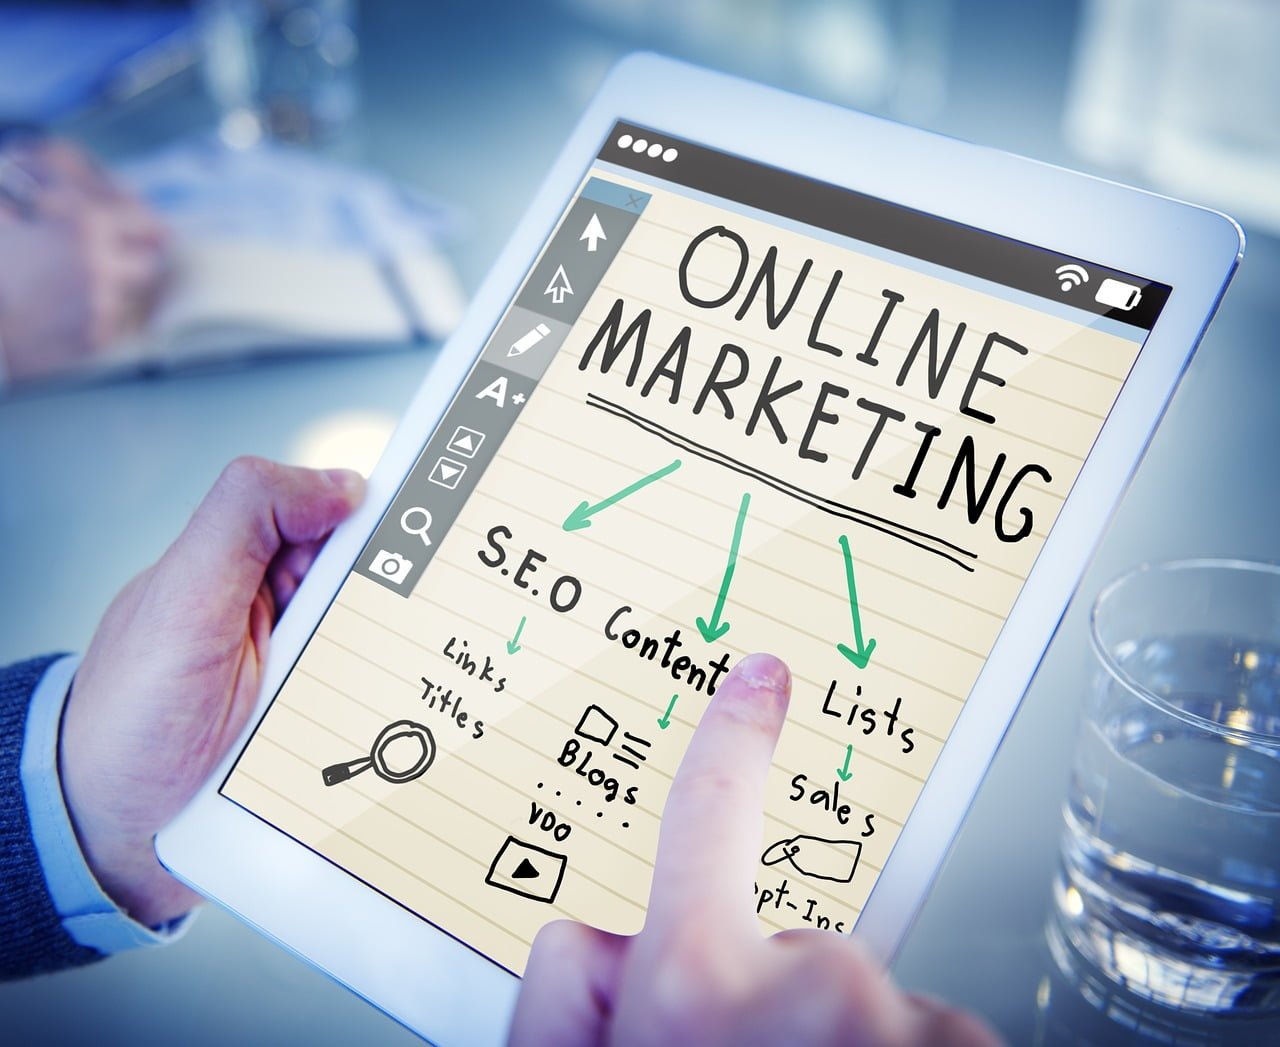 Online marketing methods